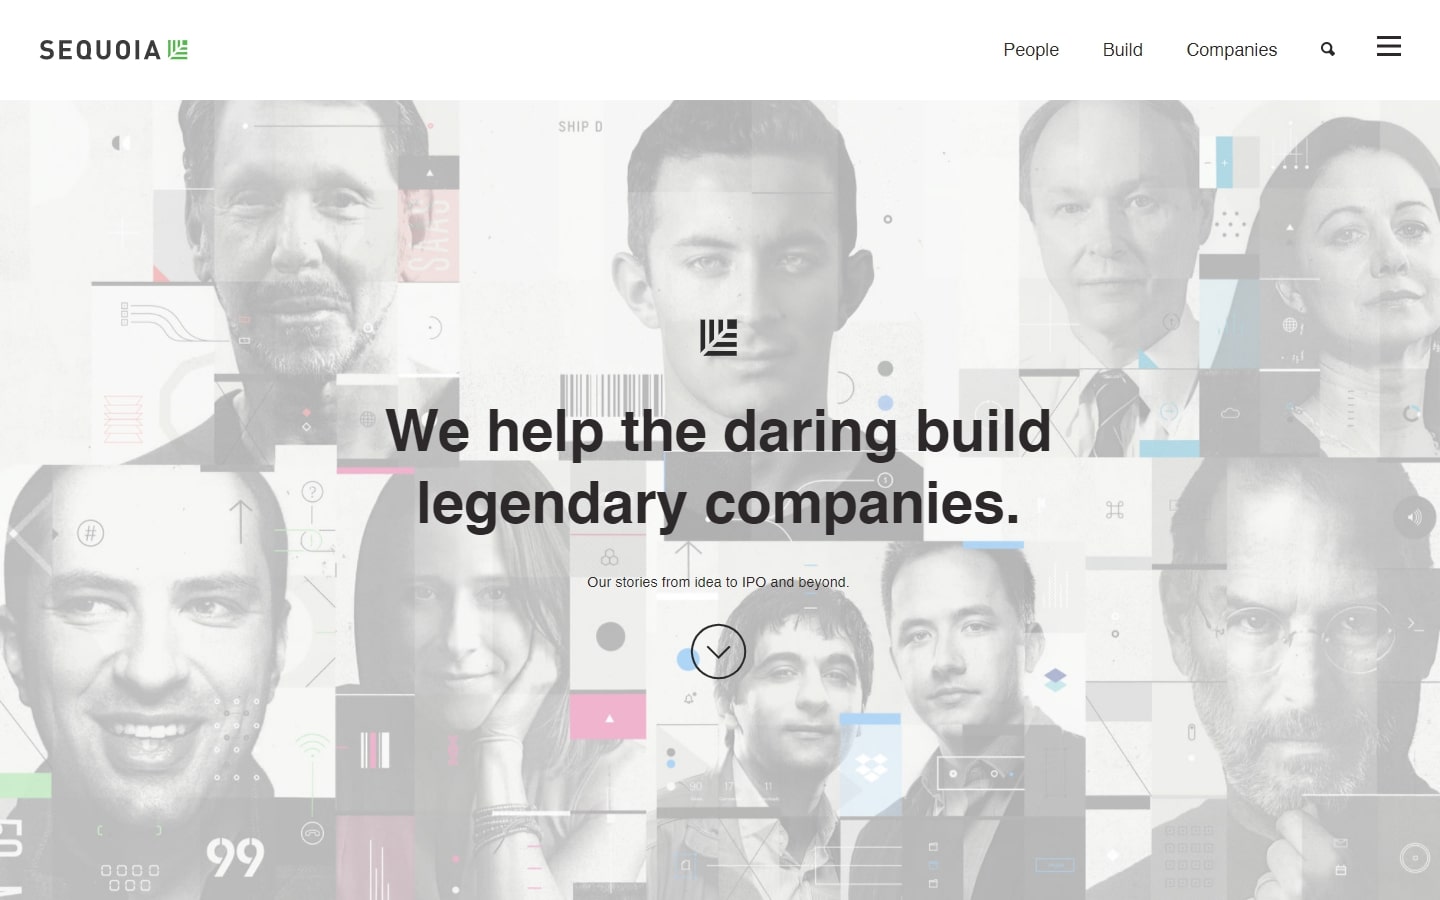 Venture Capital Website